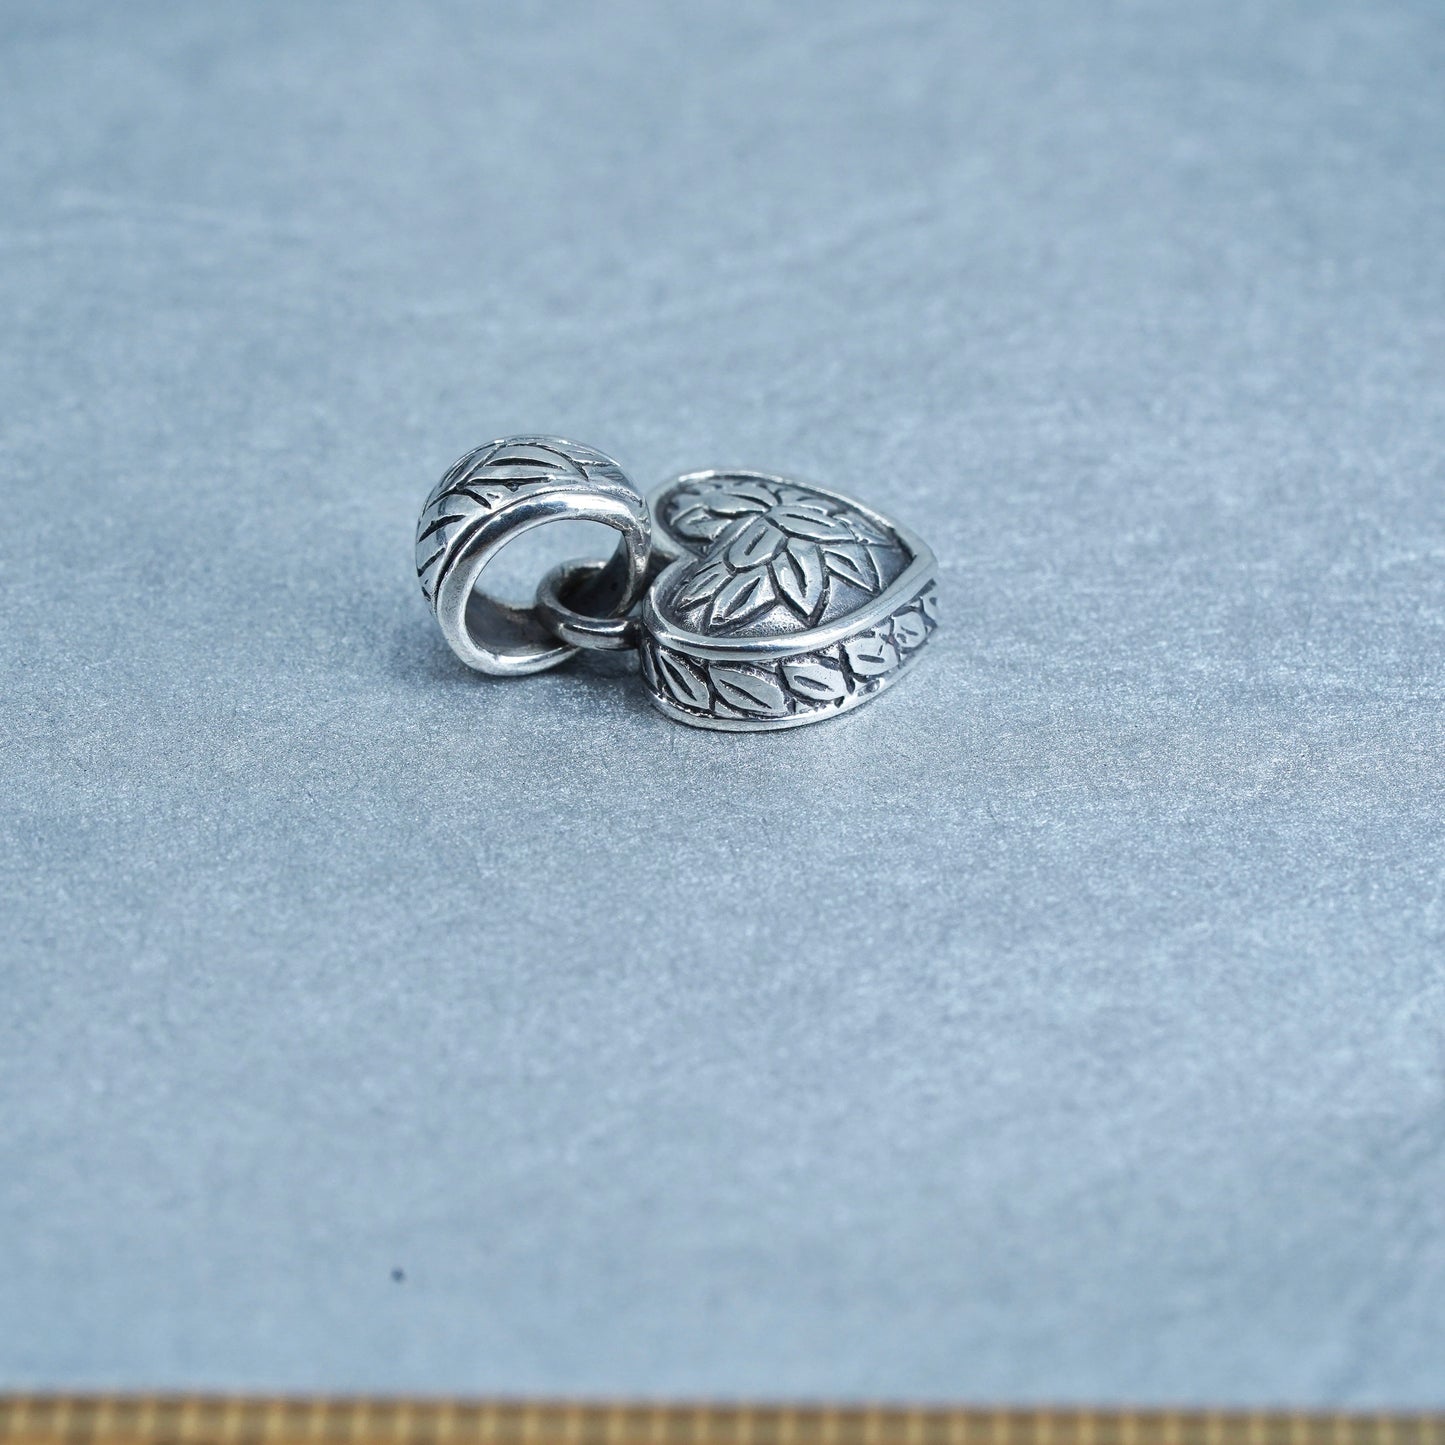 antique sterling 925 silver filigree heart charm pendant